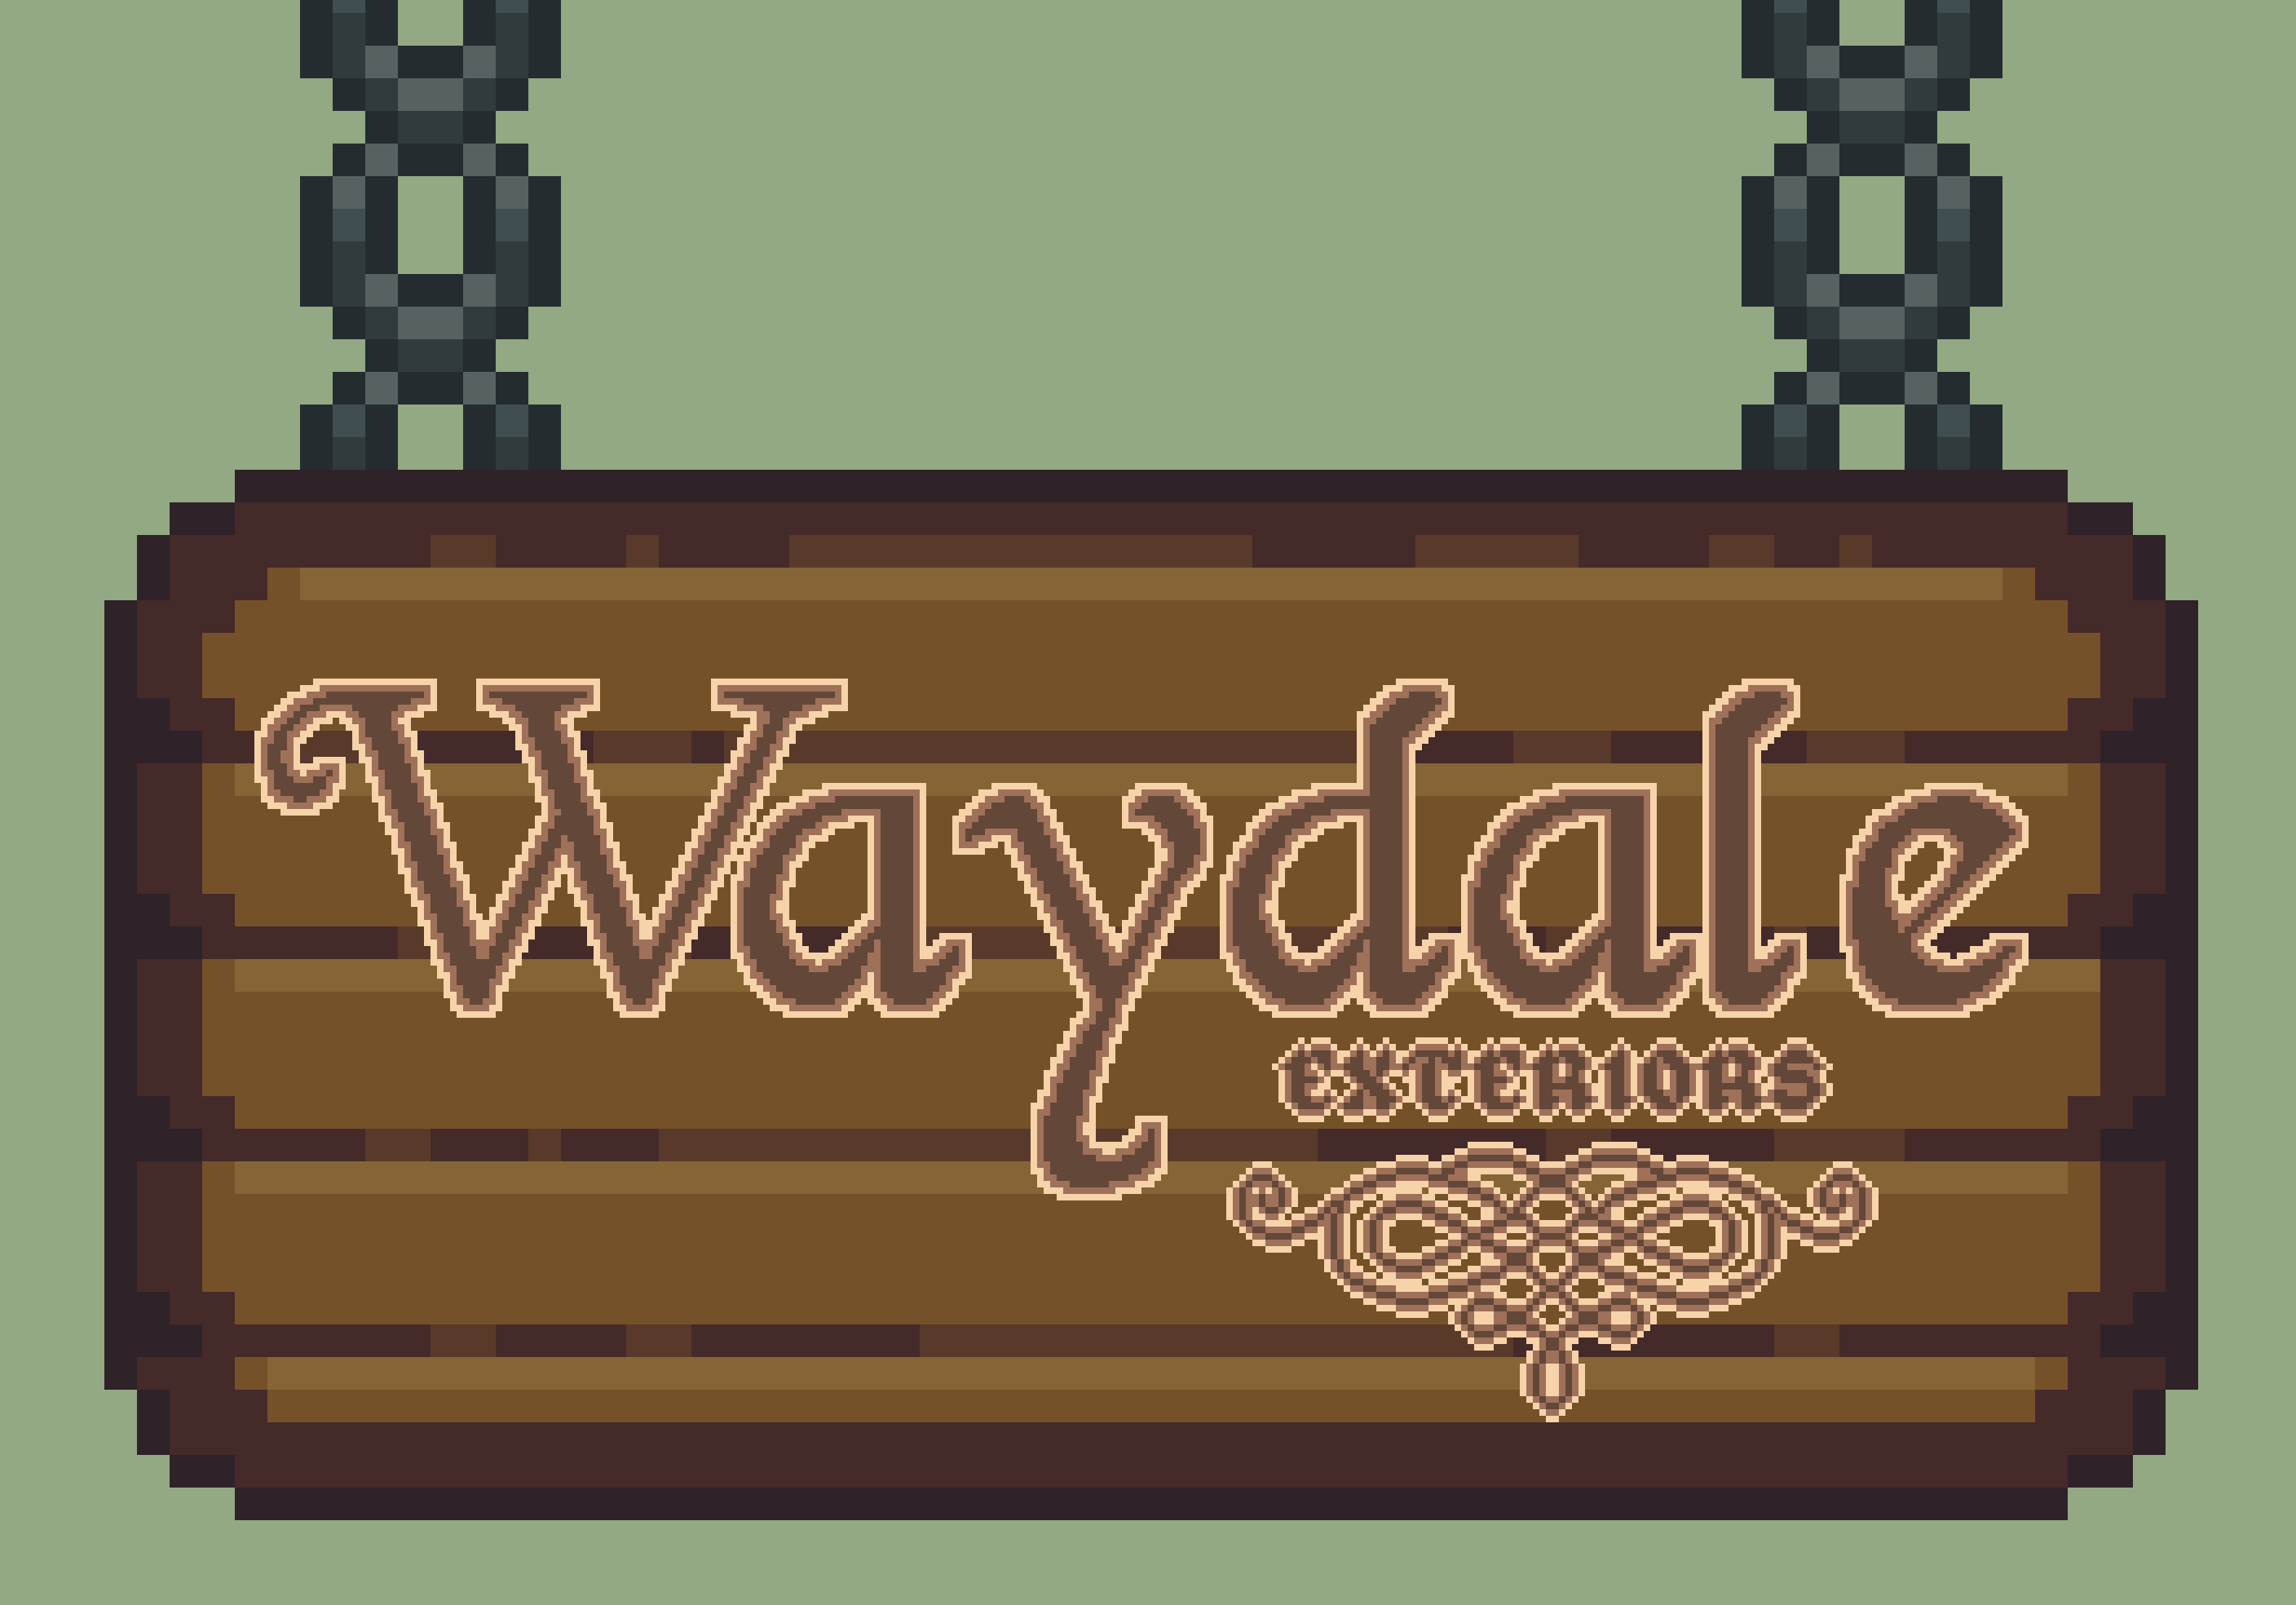 Waydale exteriors - RPG Tileset [16x16]